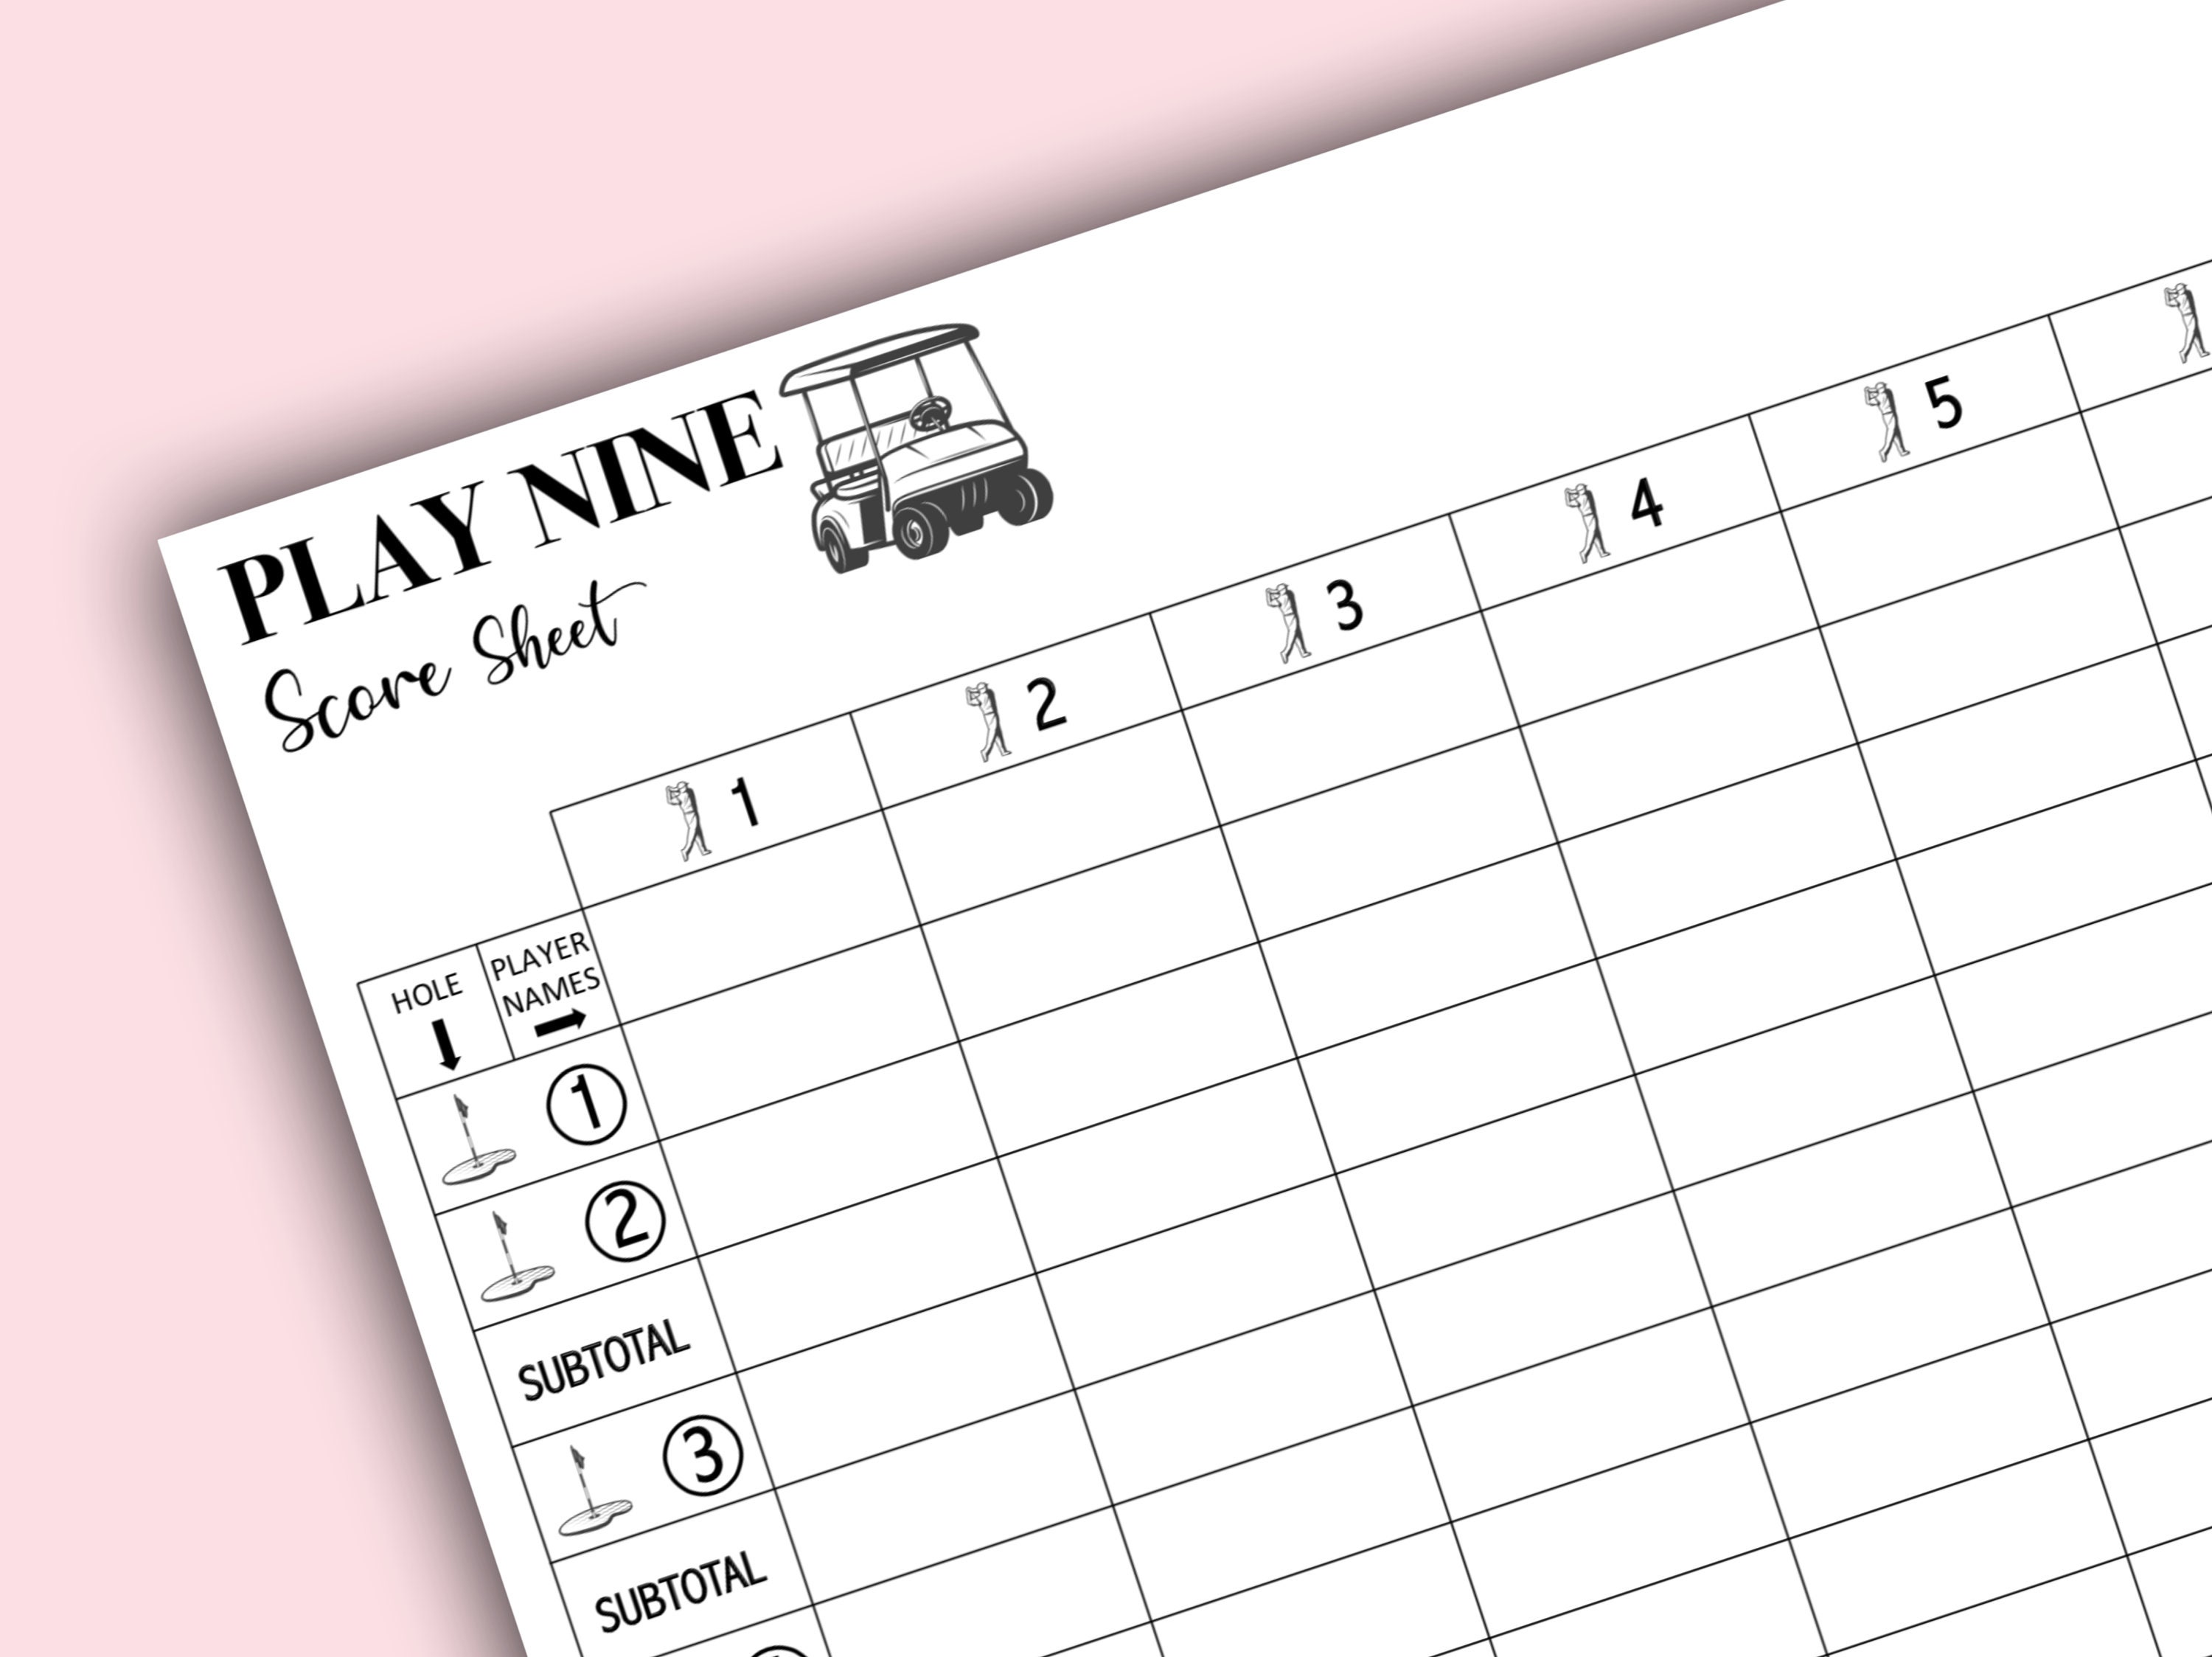 Score Card – Play Nine